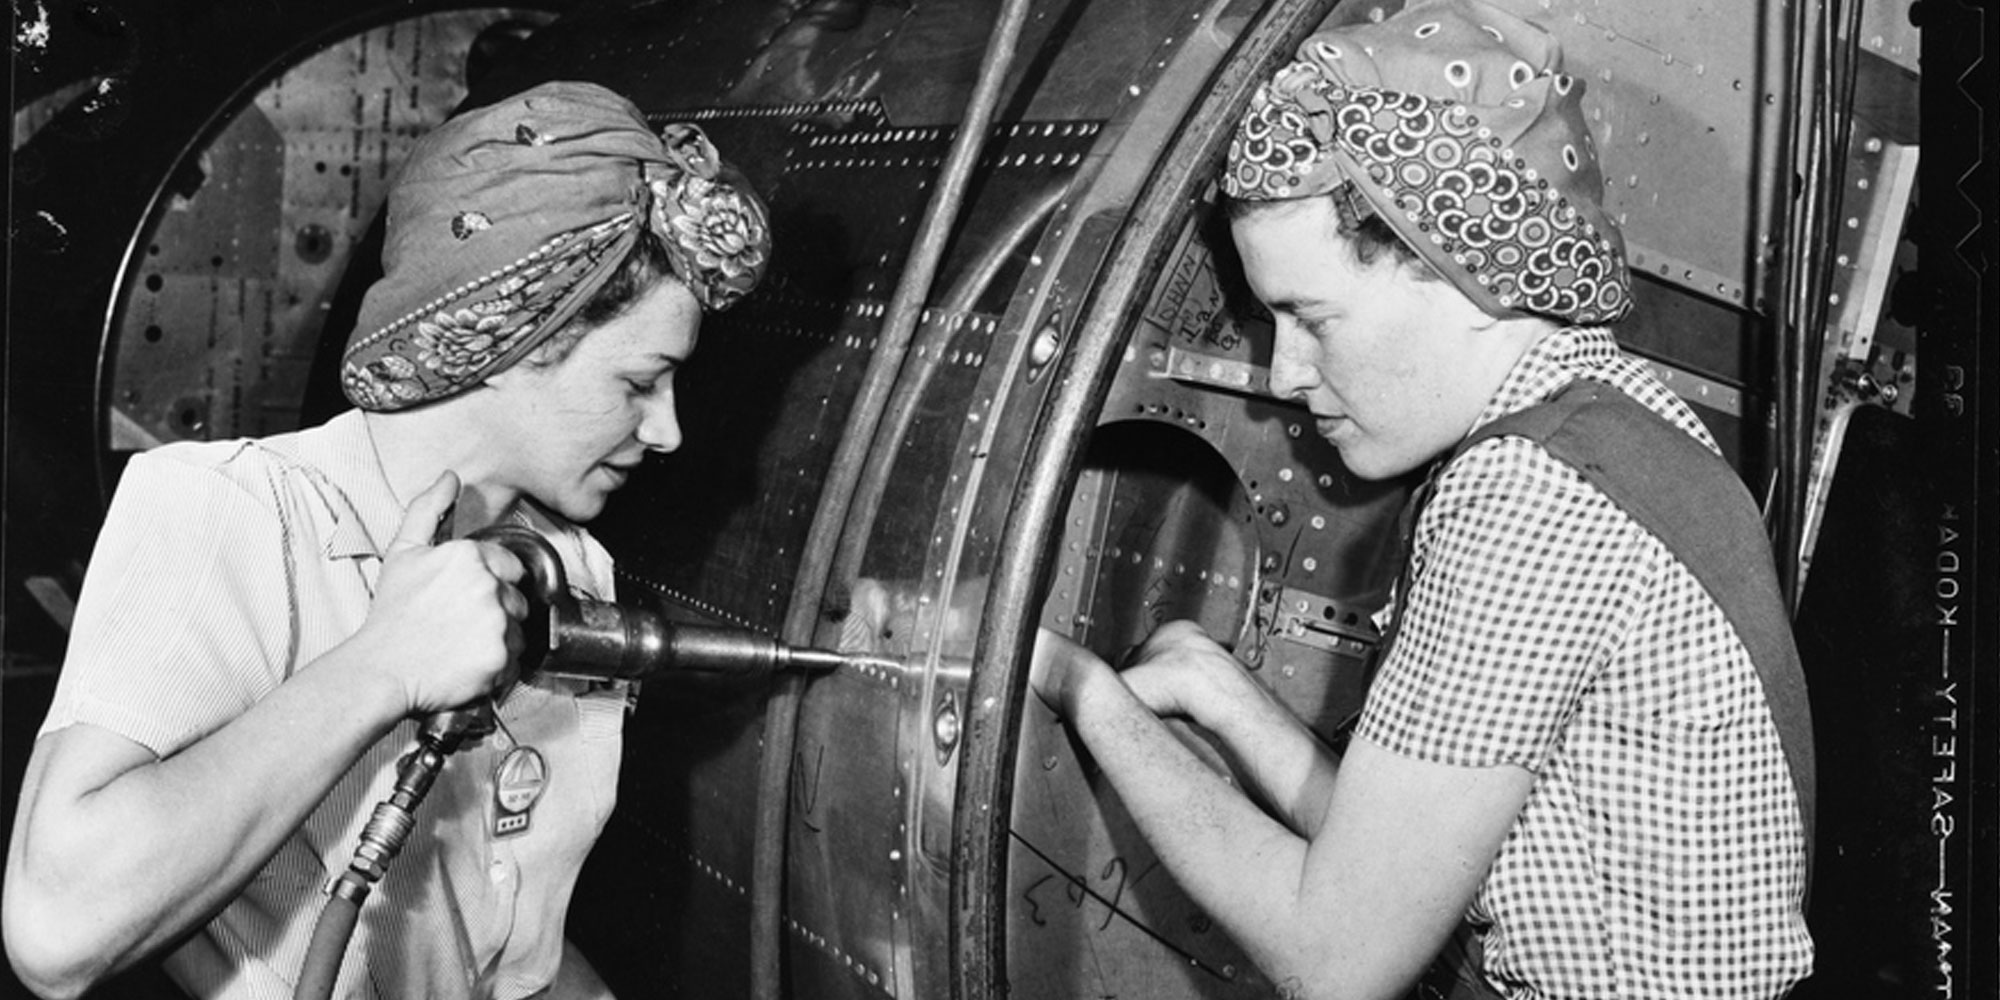 Black and White photo of women working on world war 2 airplane.